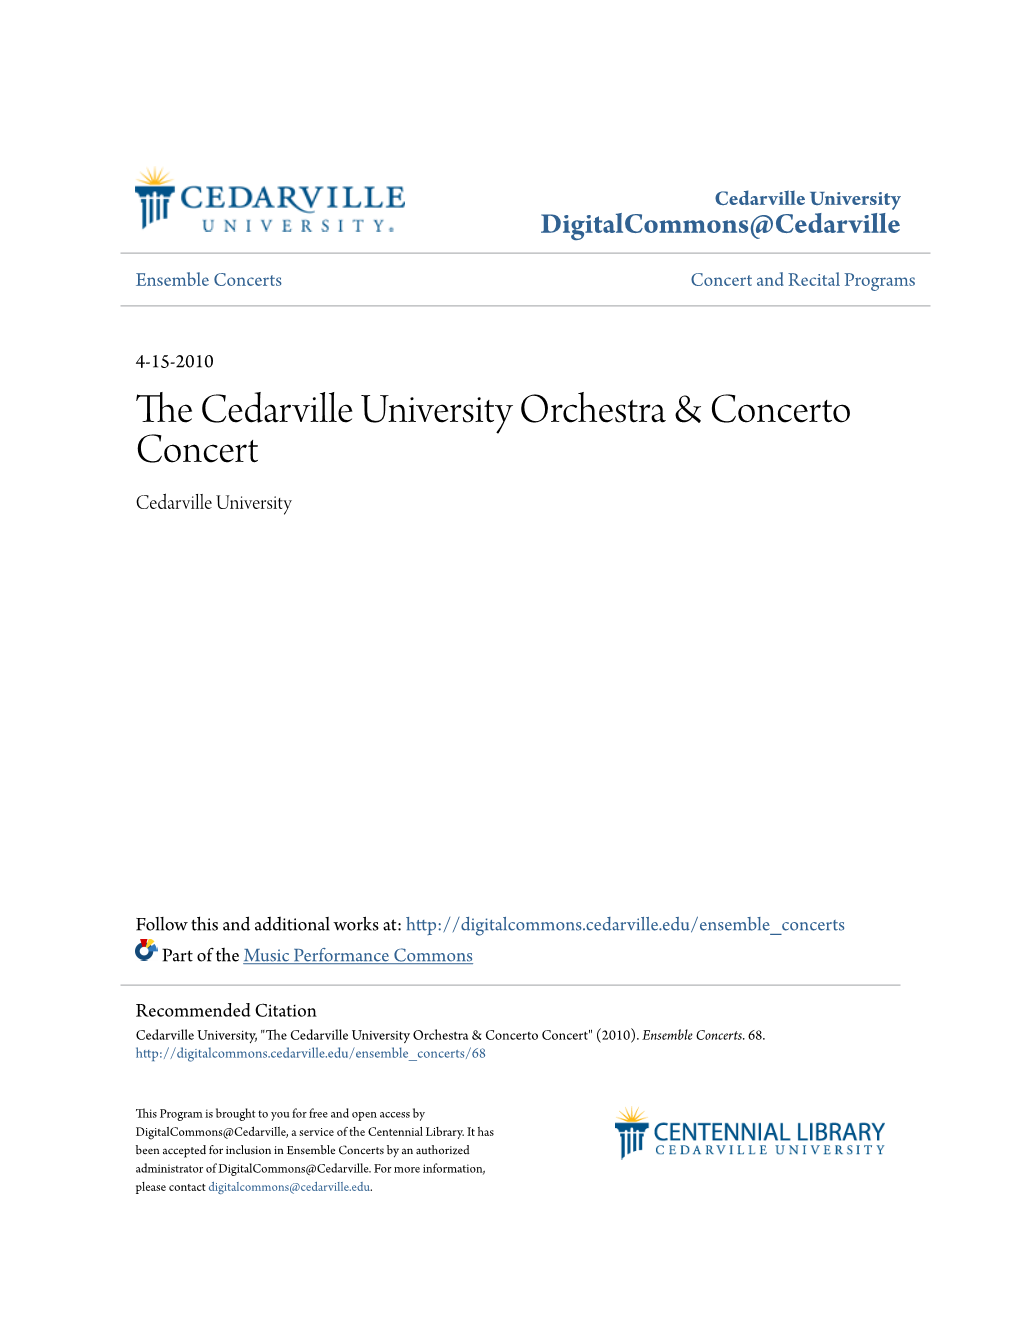 The Cedarville University Orchestra & Concerto Concert